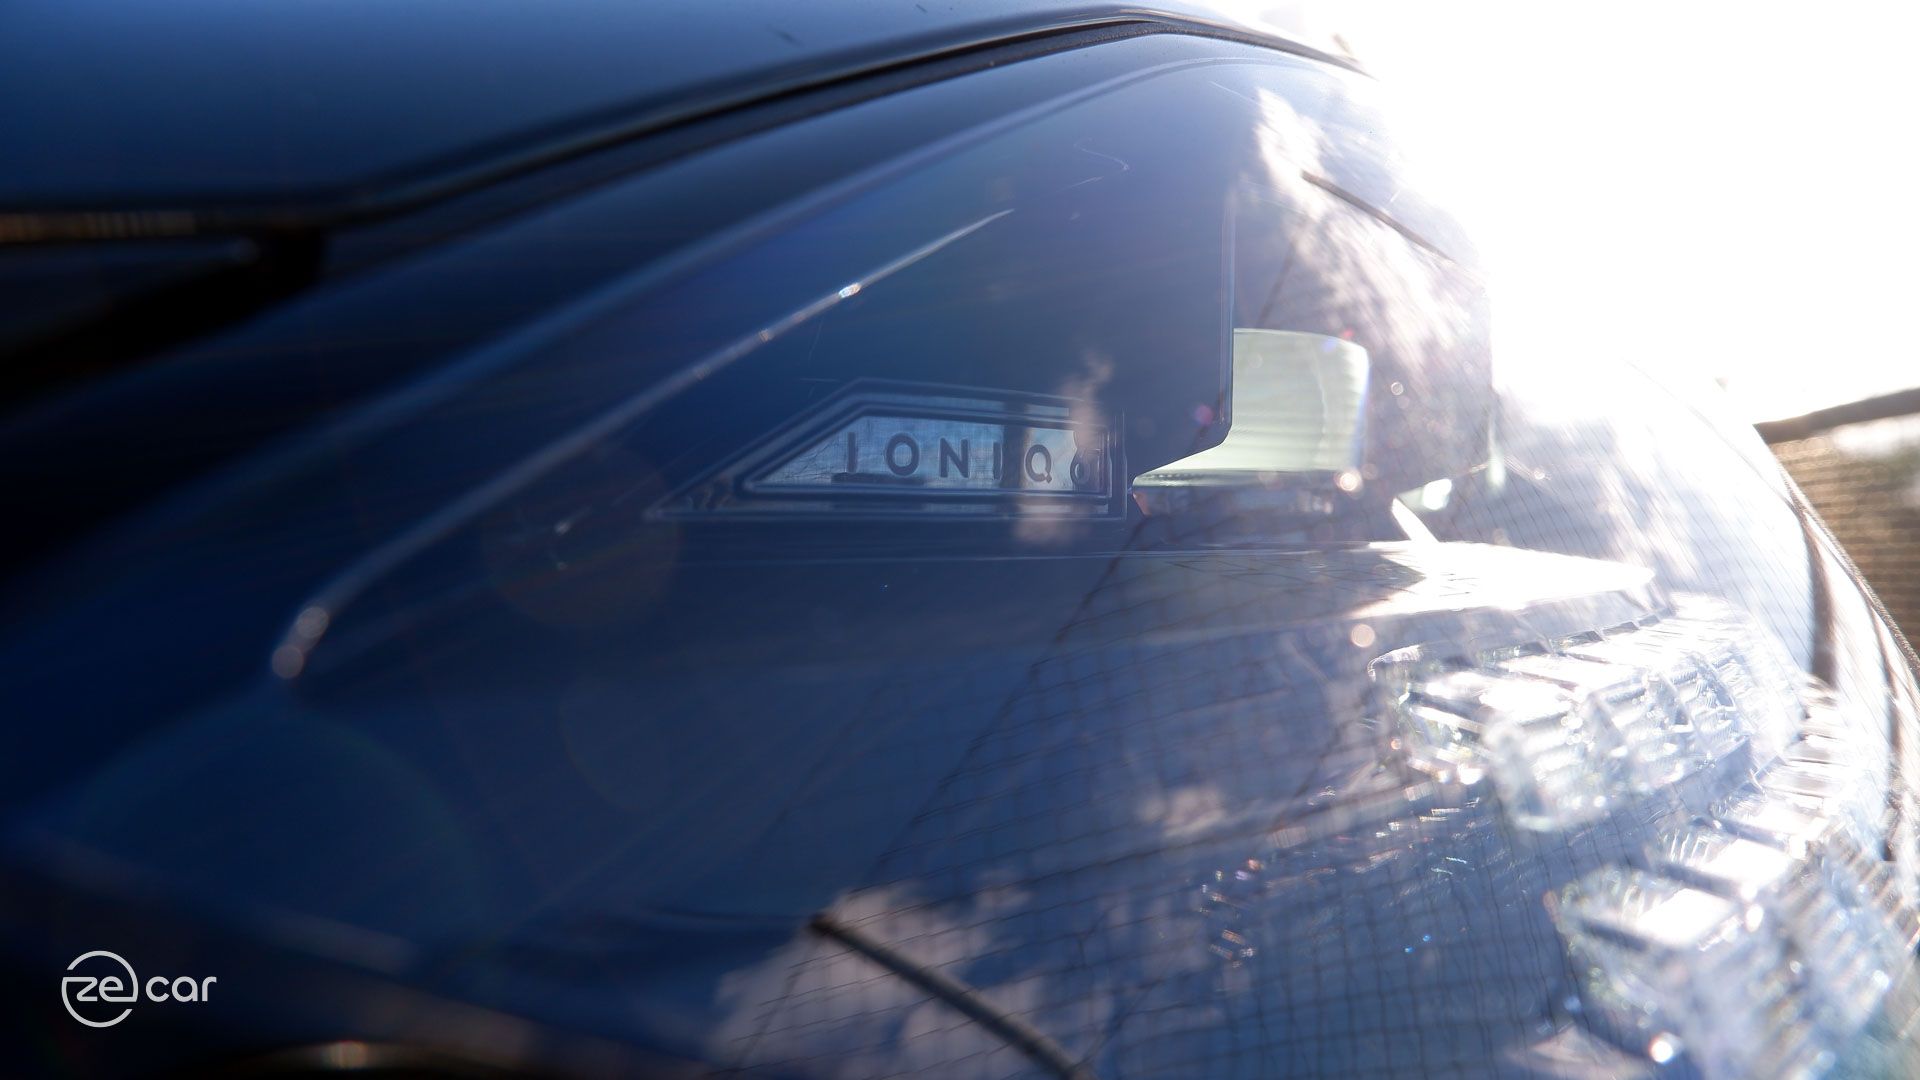 Hyundai Ioniq 6 headlight logo and front quarter view